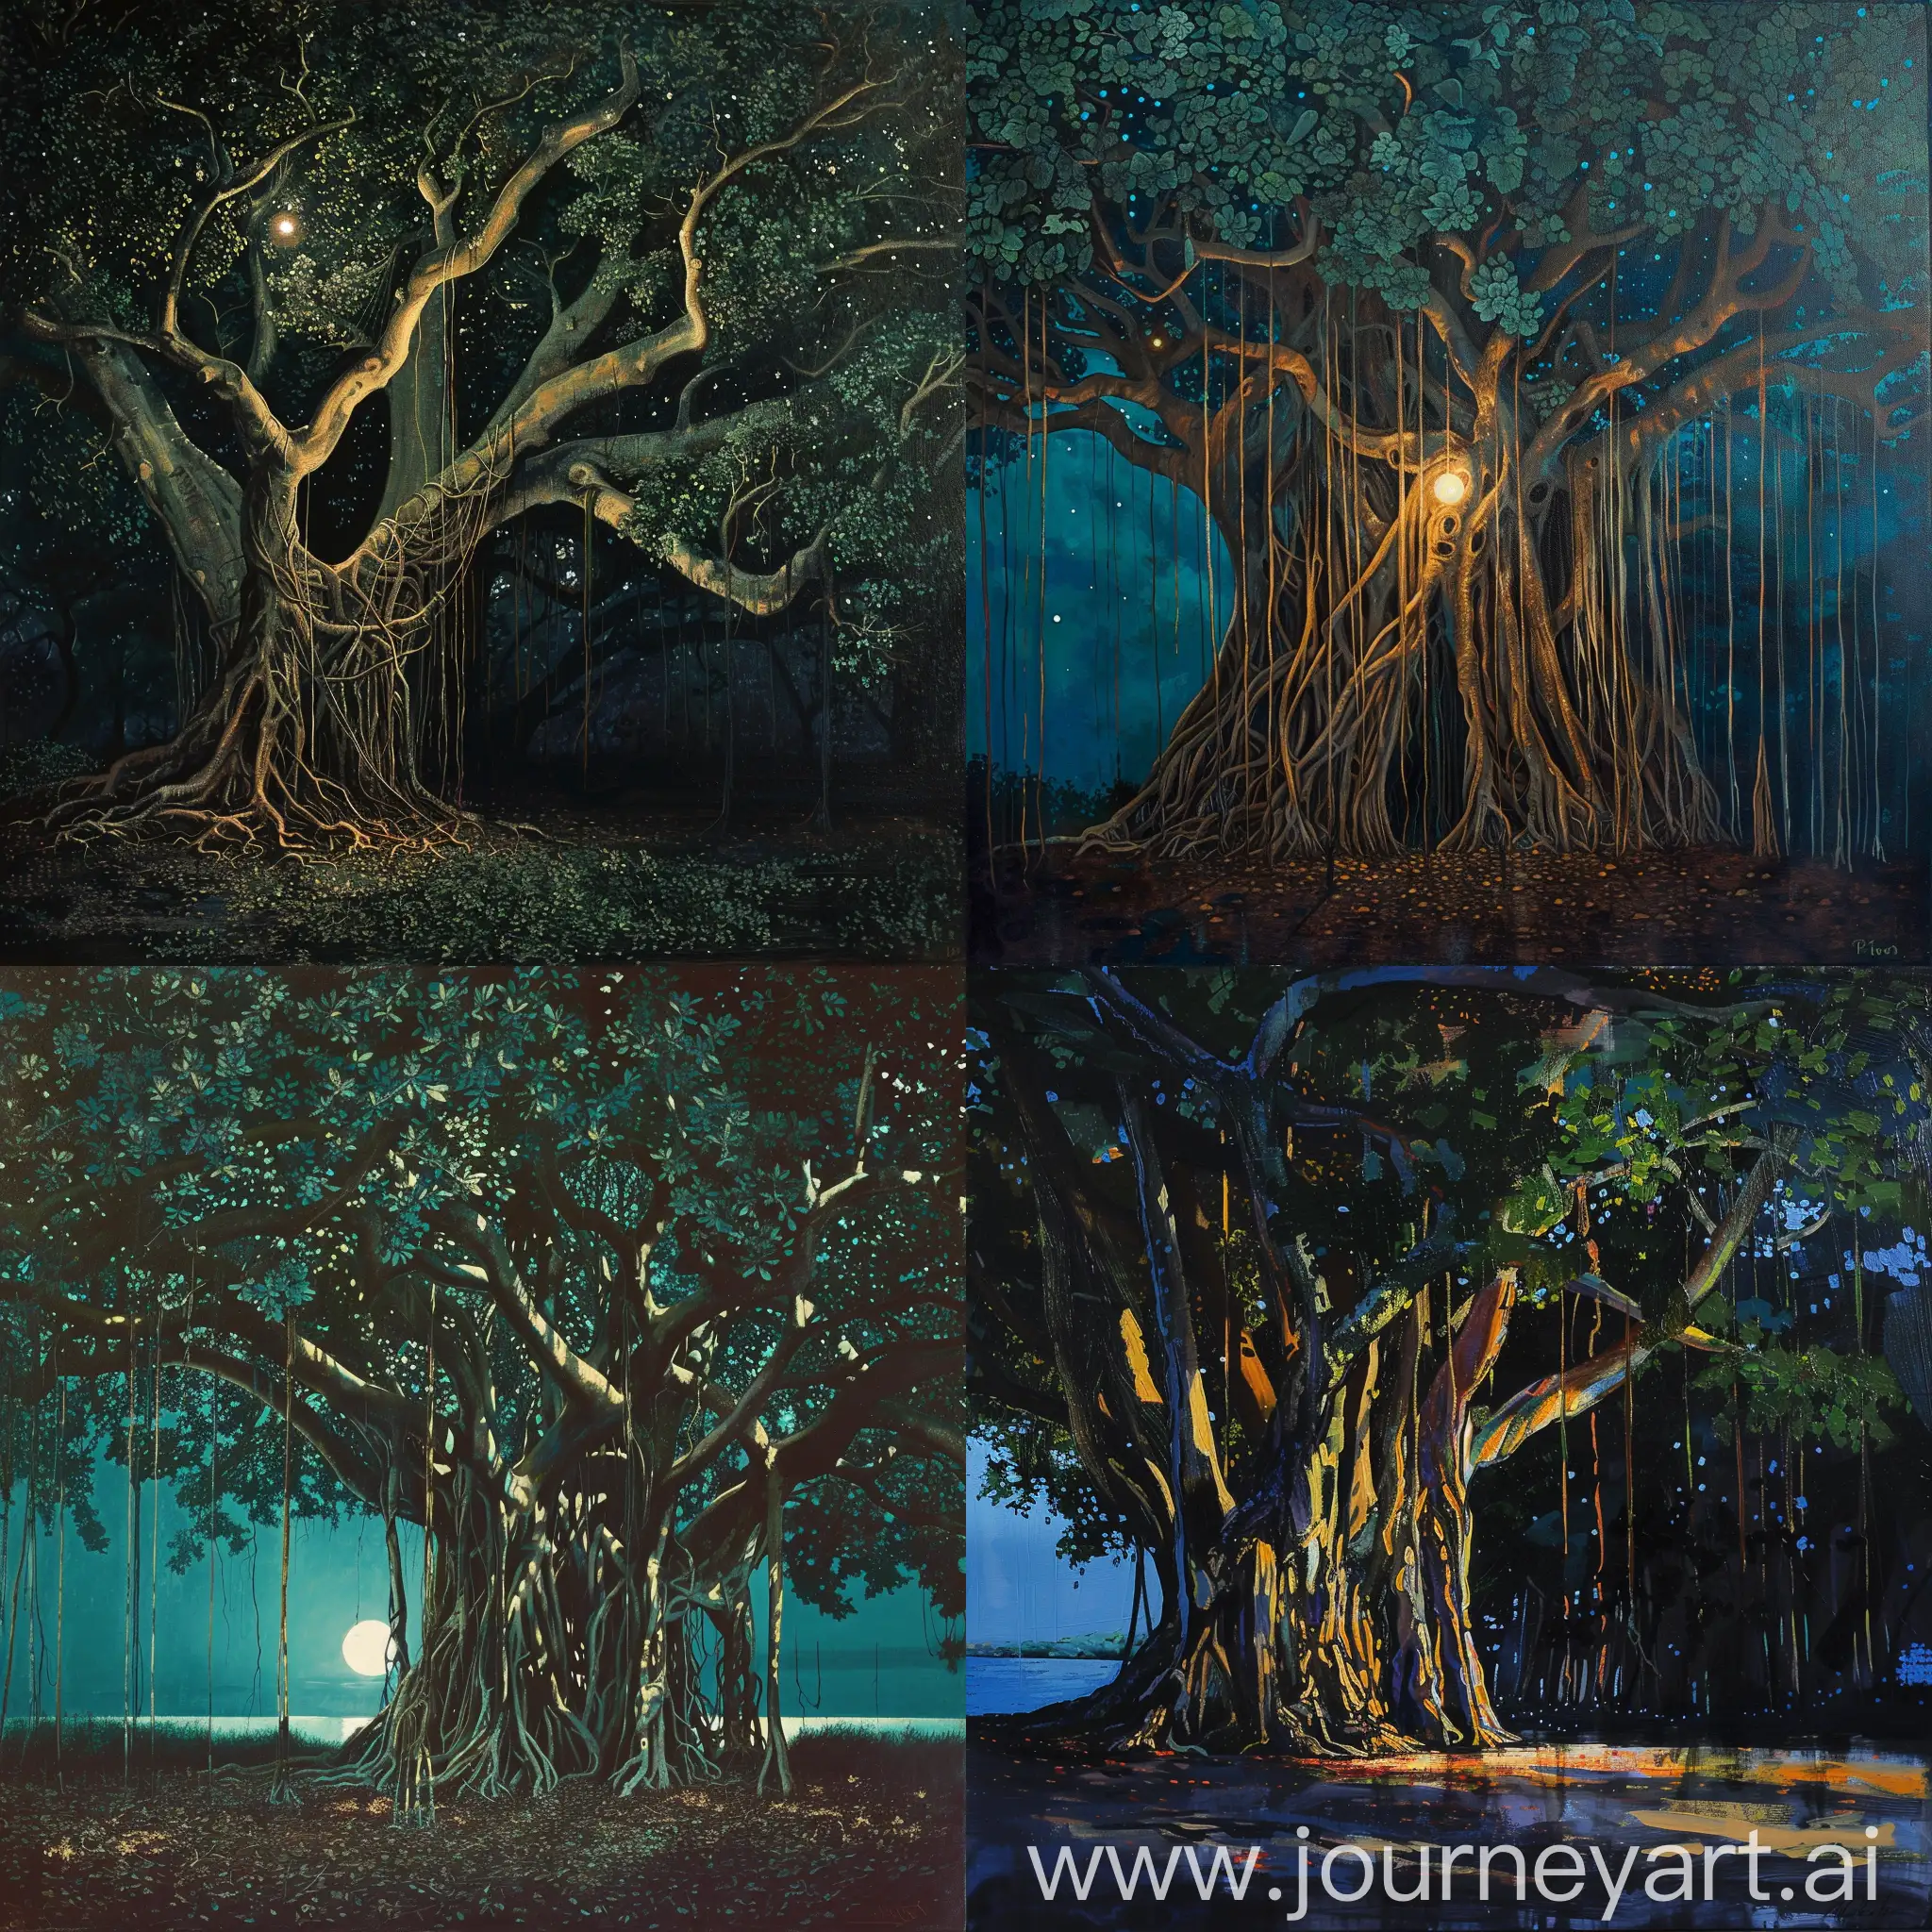 Peaceful-Night-Scene-Banyan-Tree-Under-Radiant-Moonlight